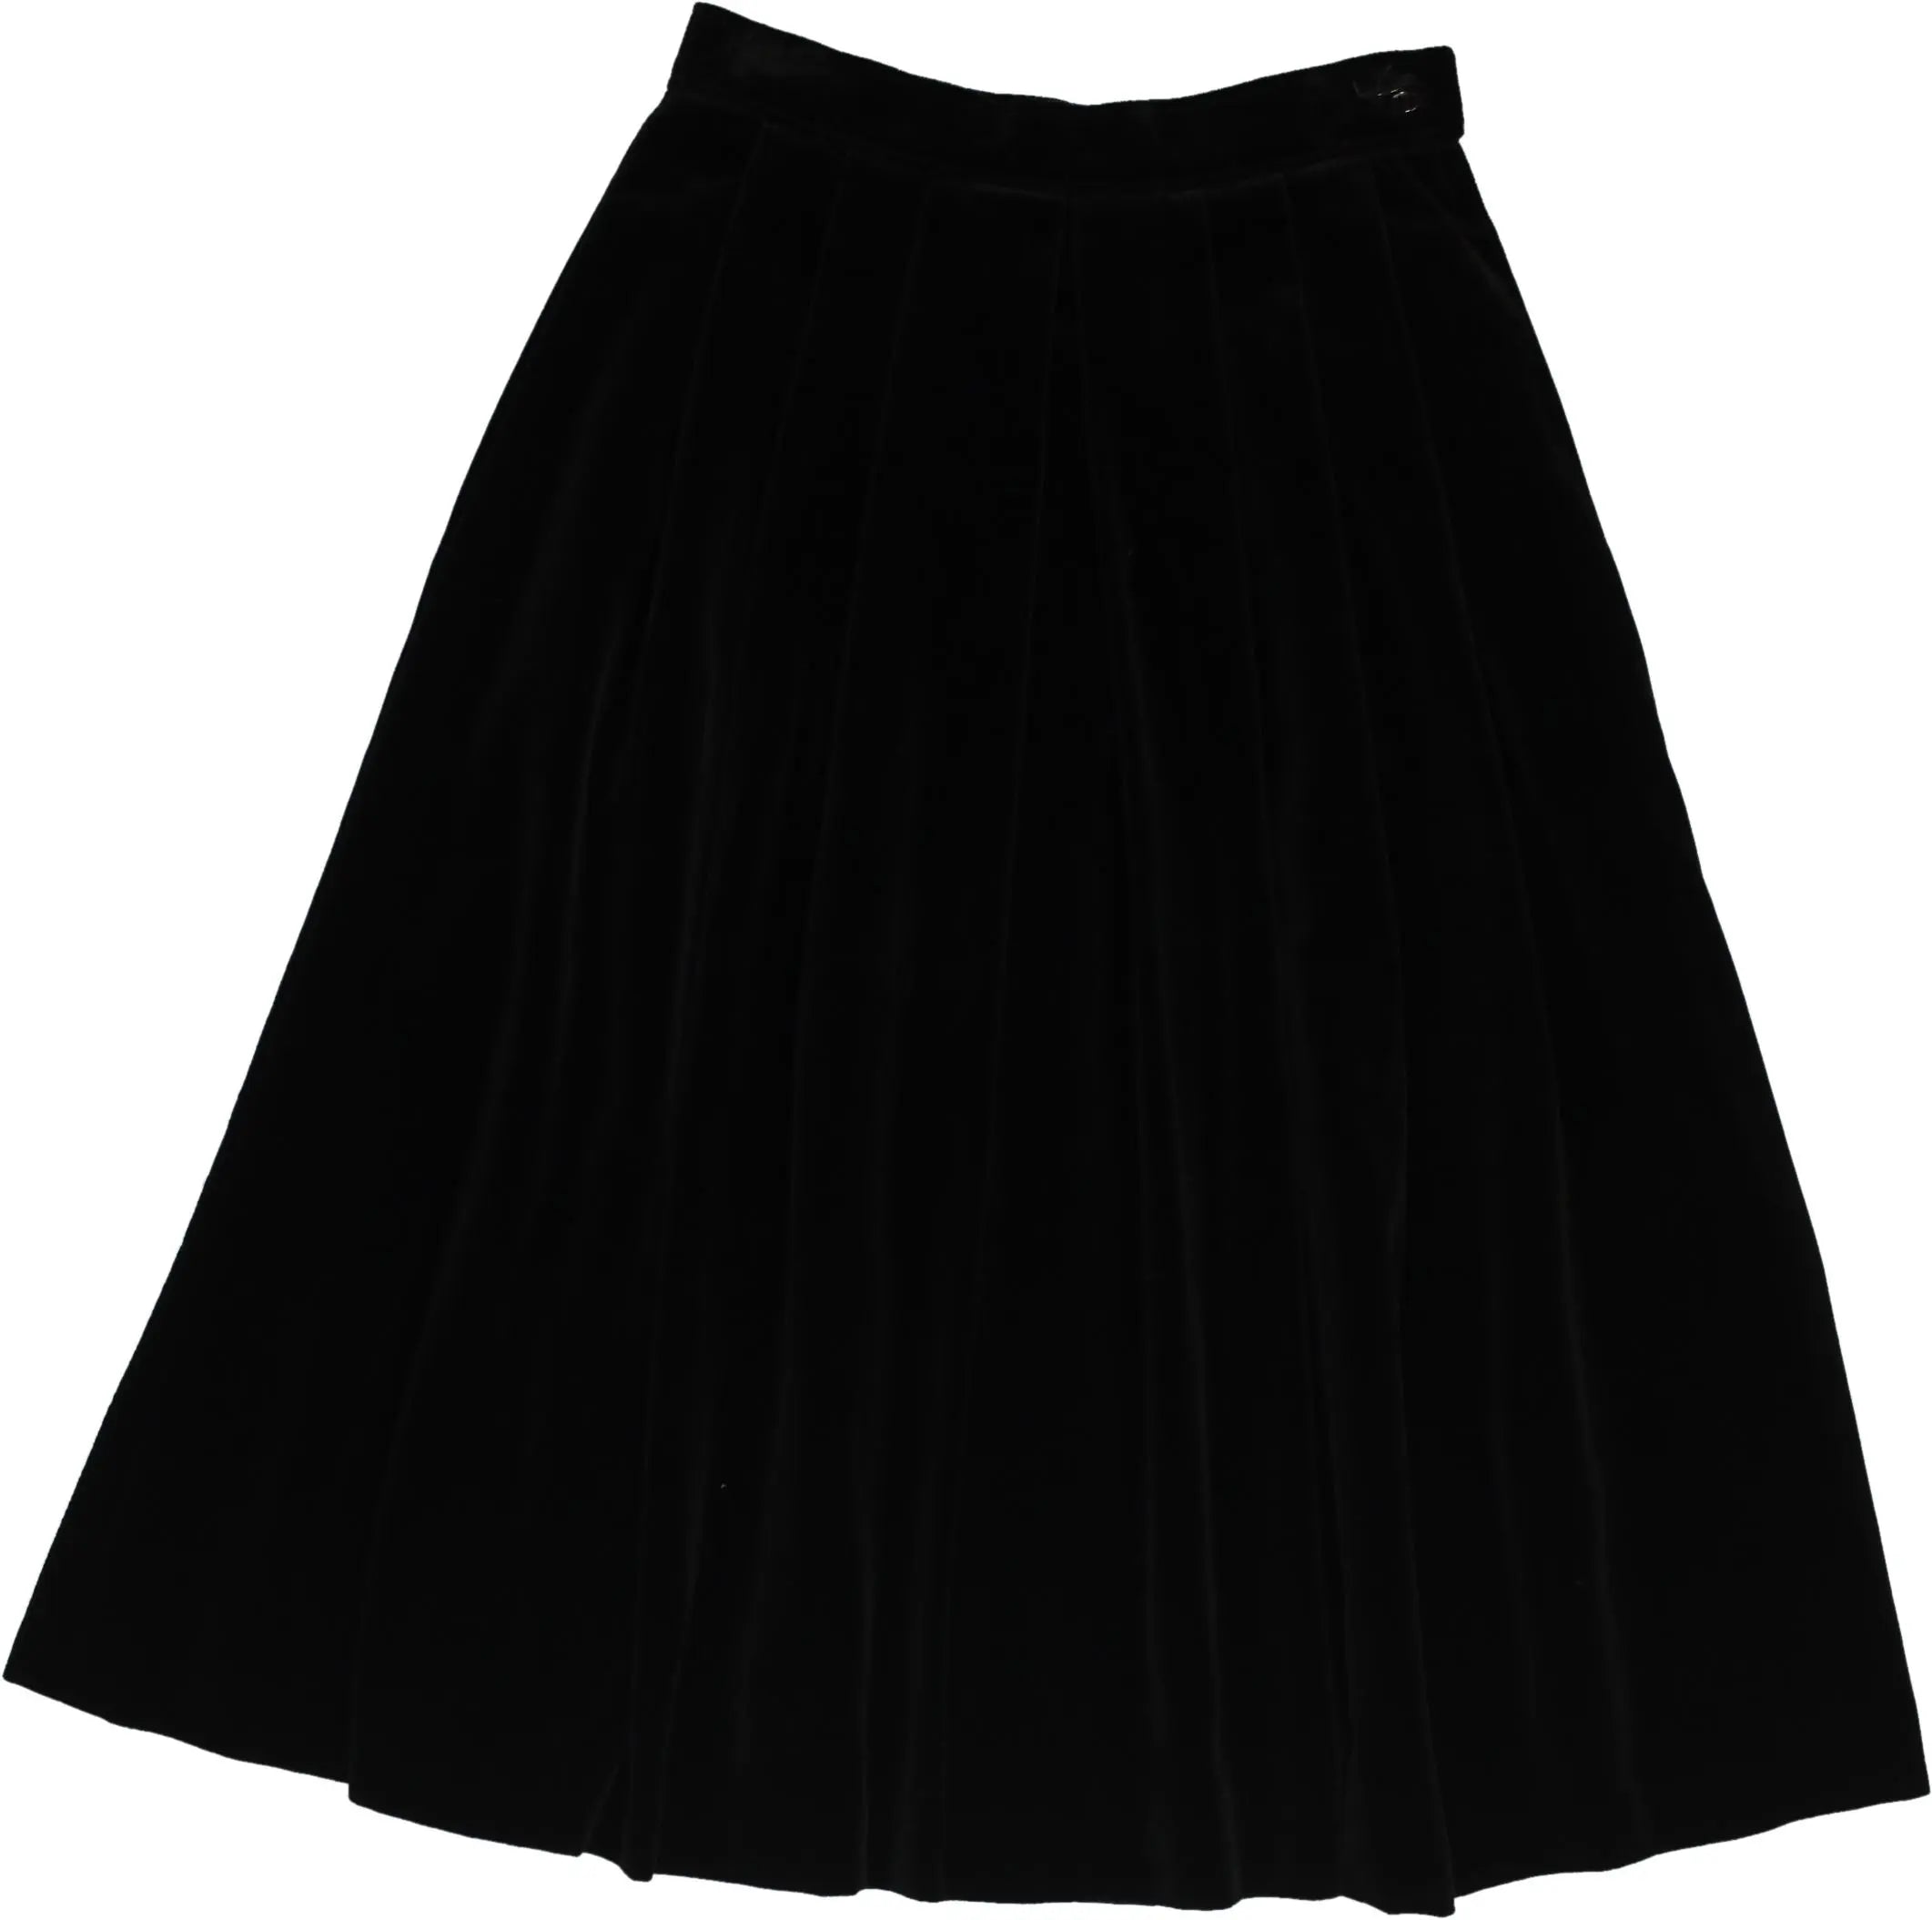 Unknown - Black velvet skirt- ThriftTale.com - Vintage and second handclothing